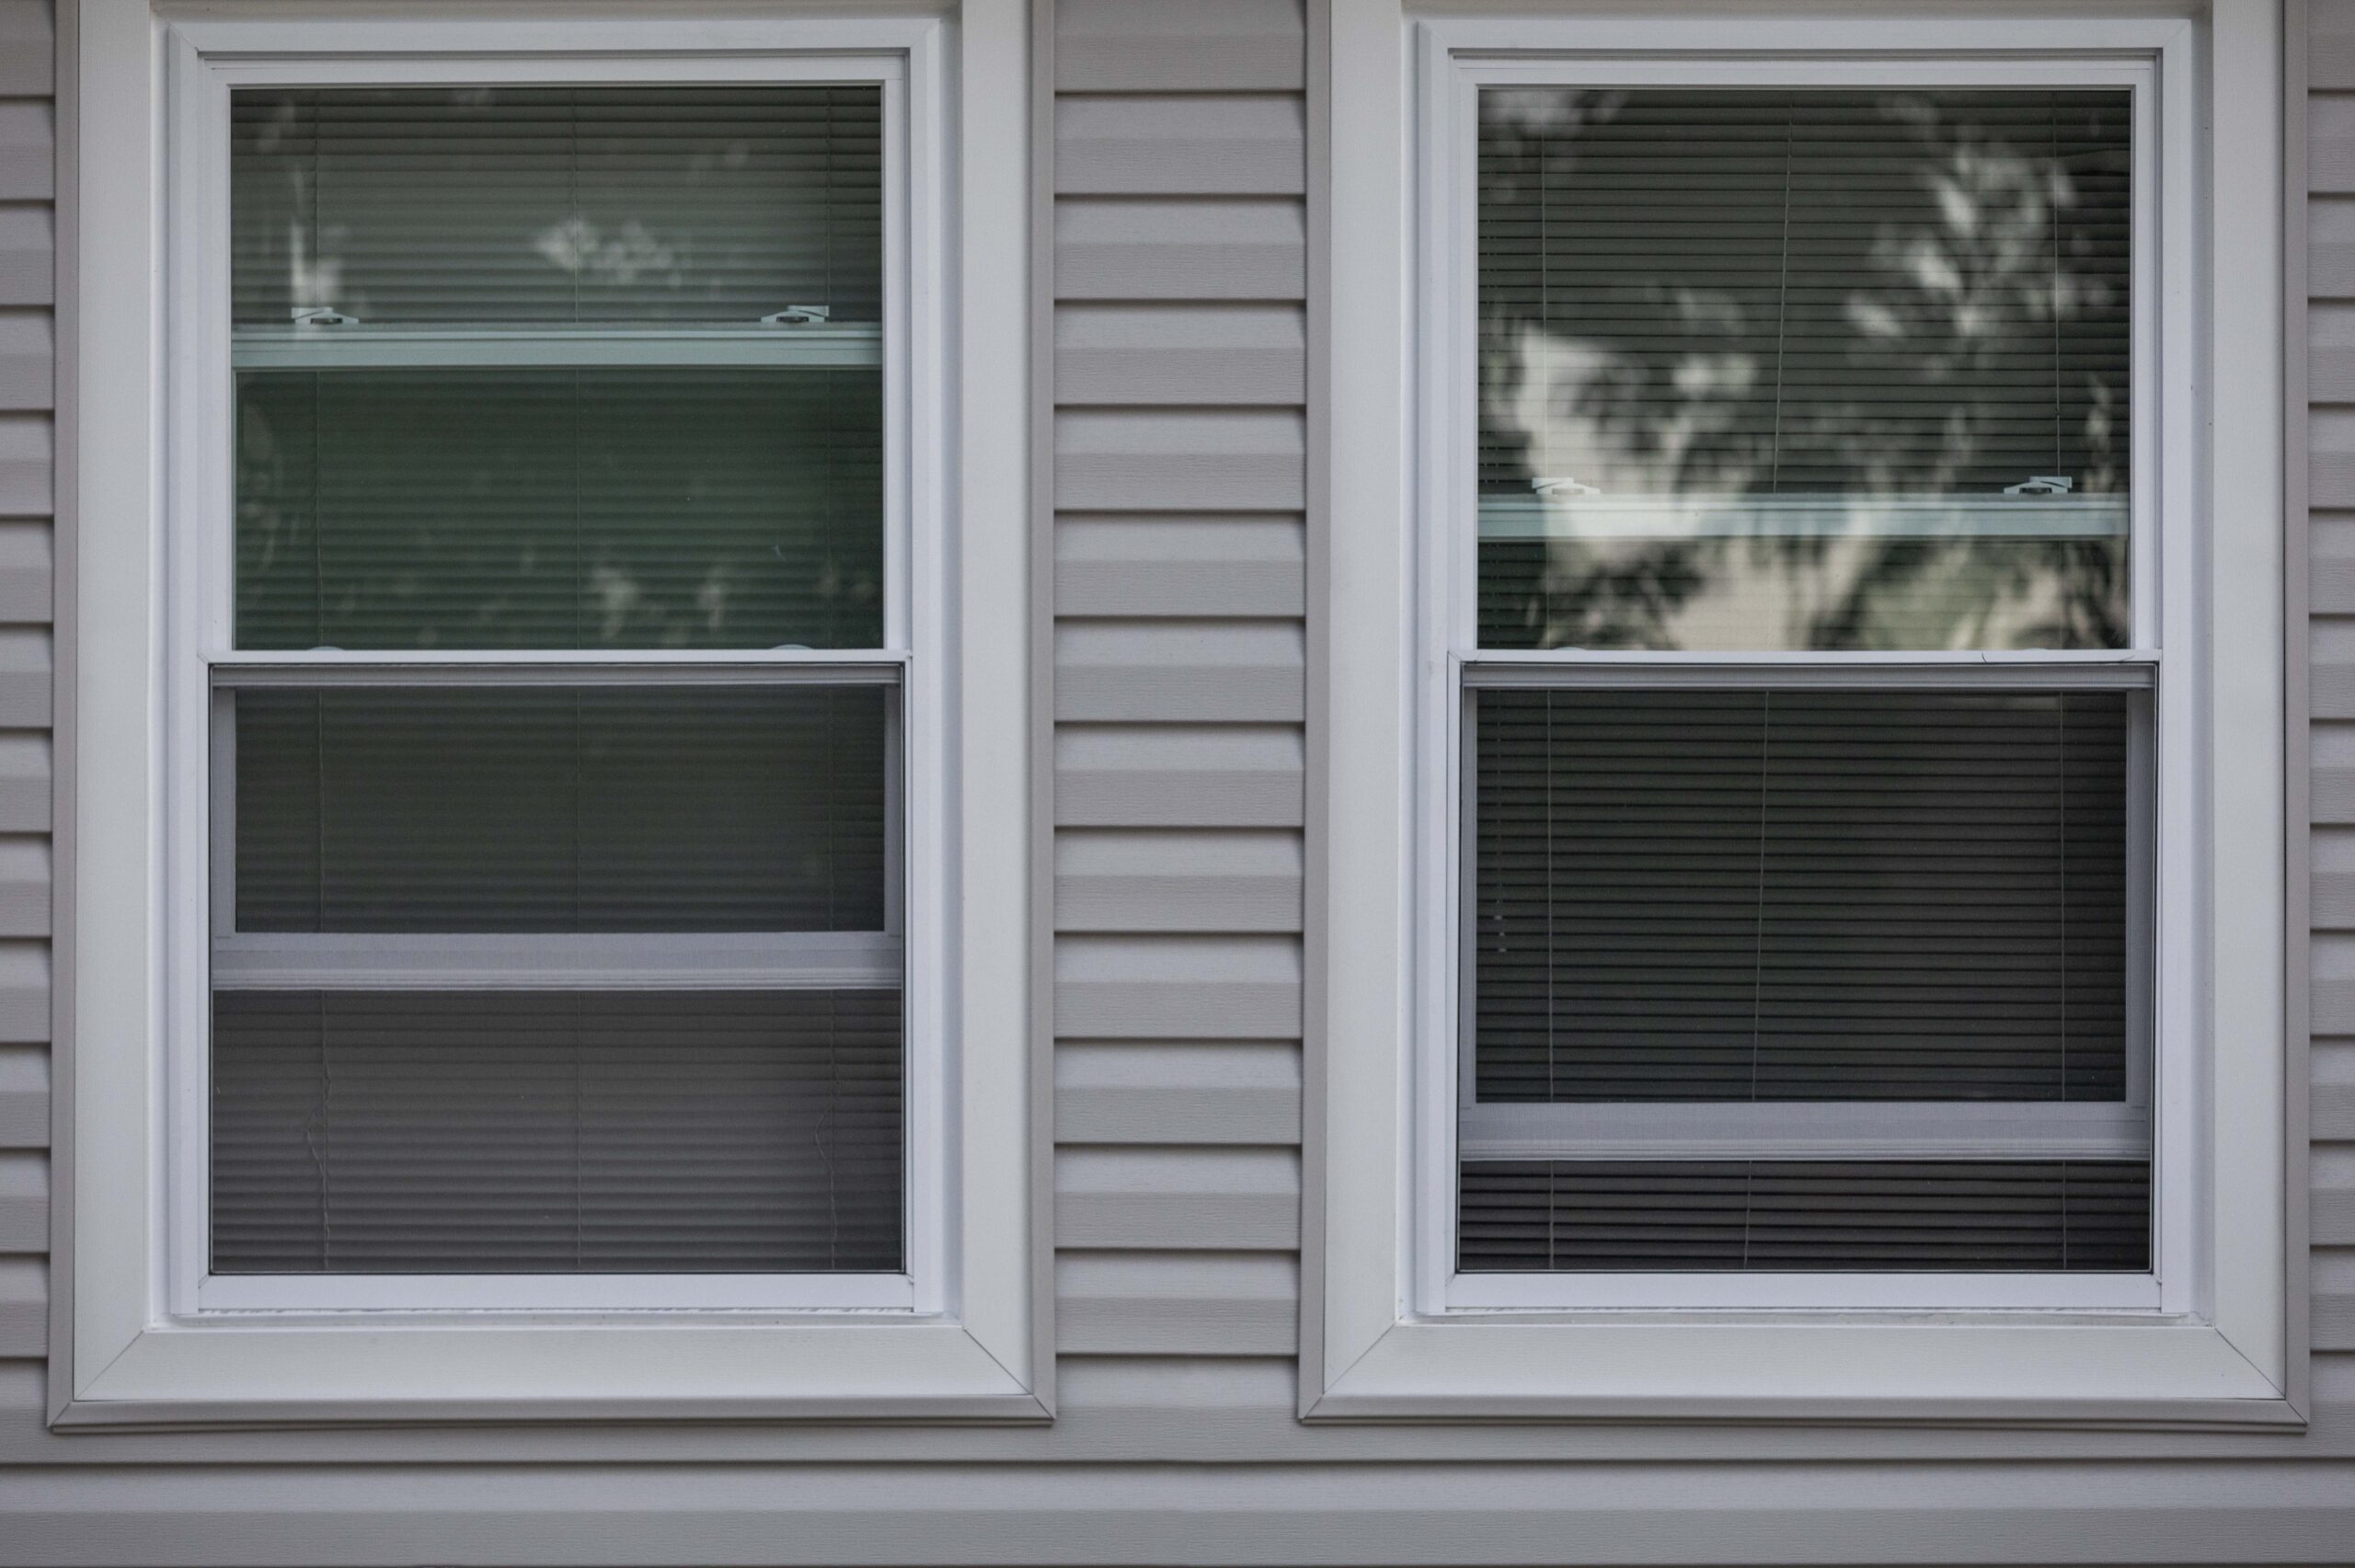 Home Maintenance Series: Window Screens